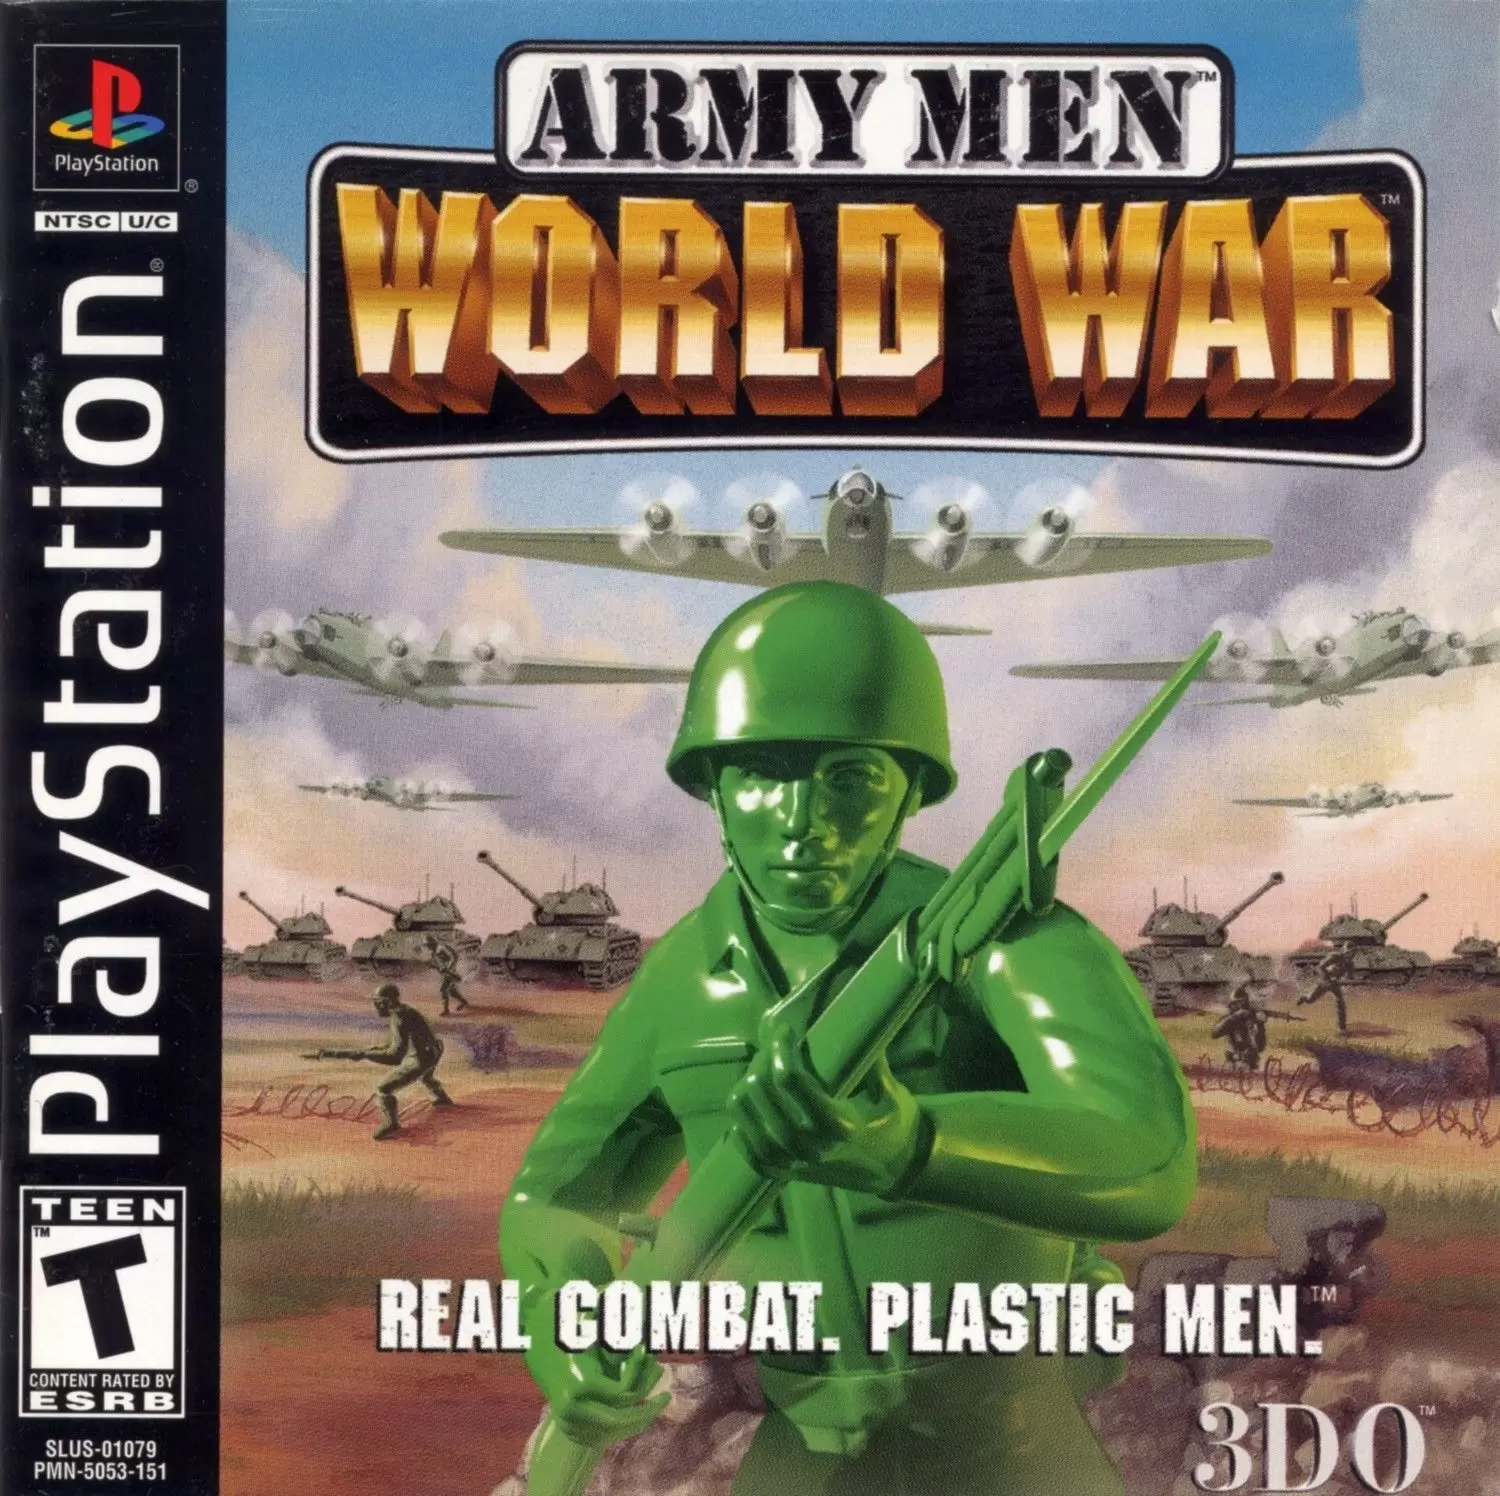 Playstation games - Army Men: World War